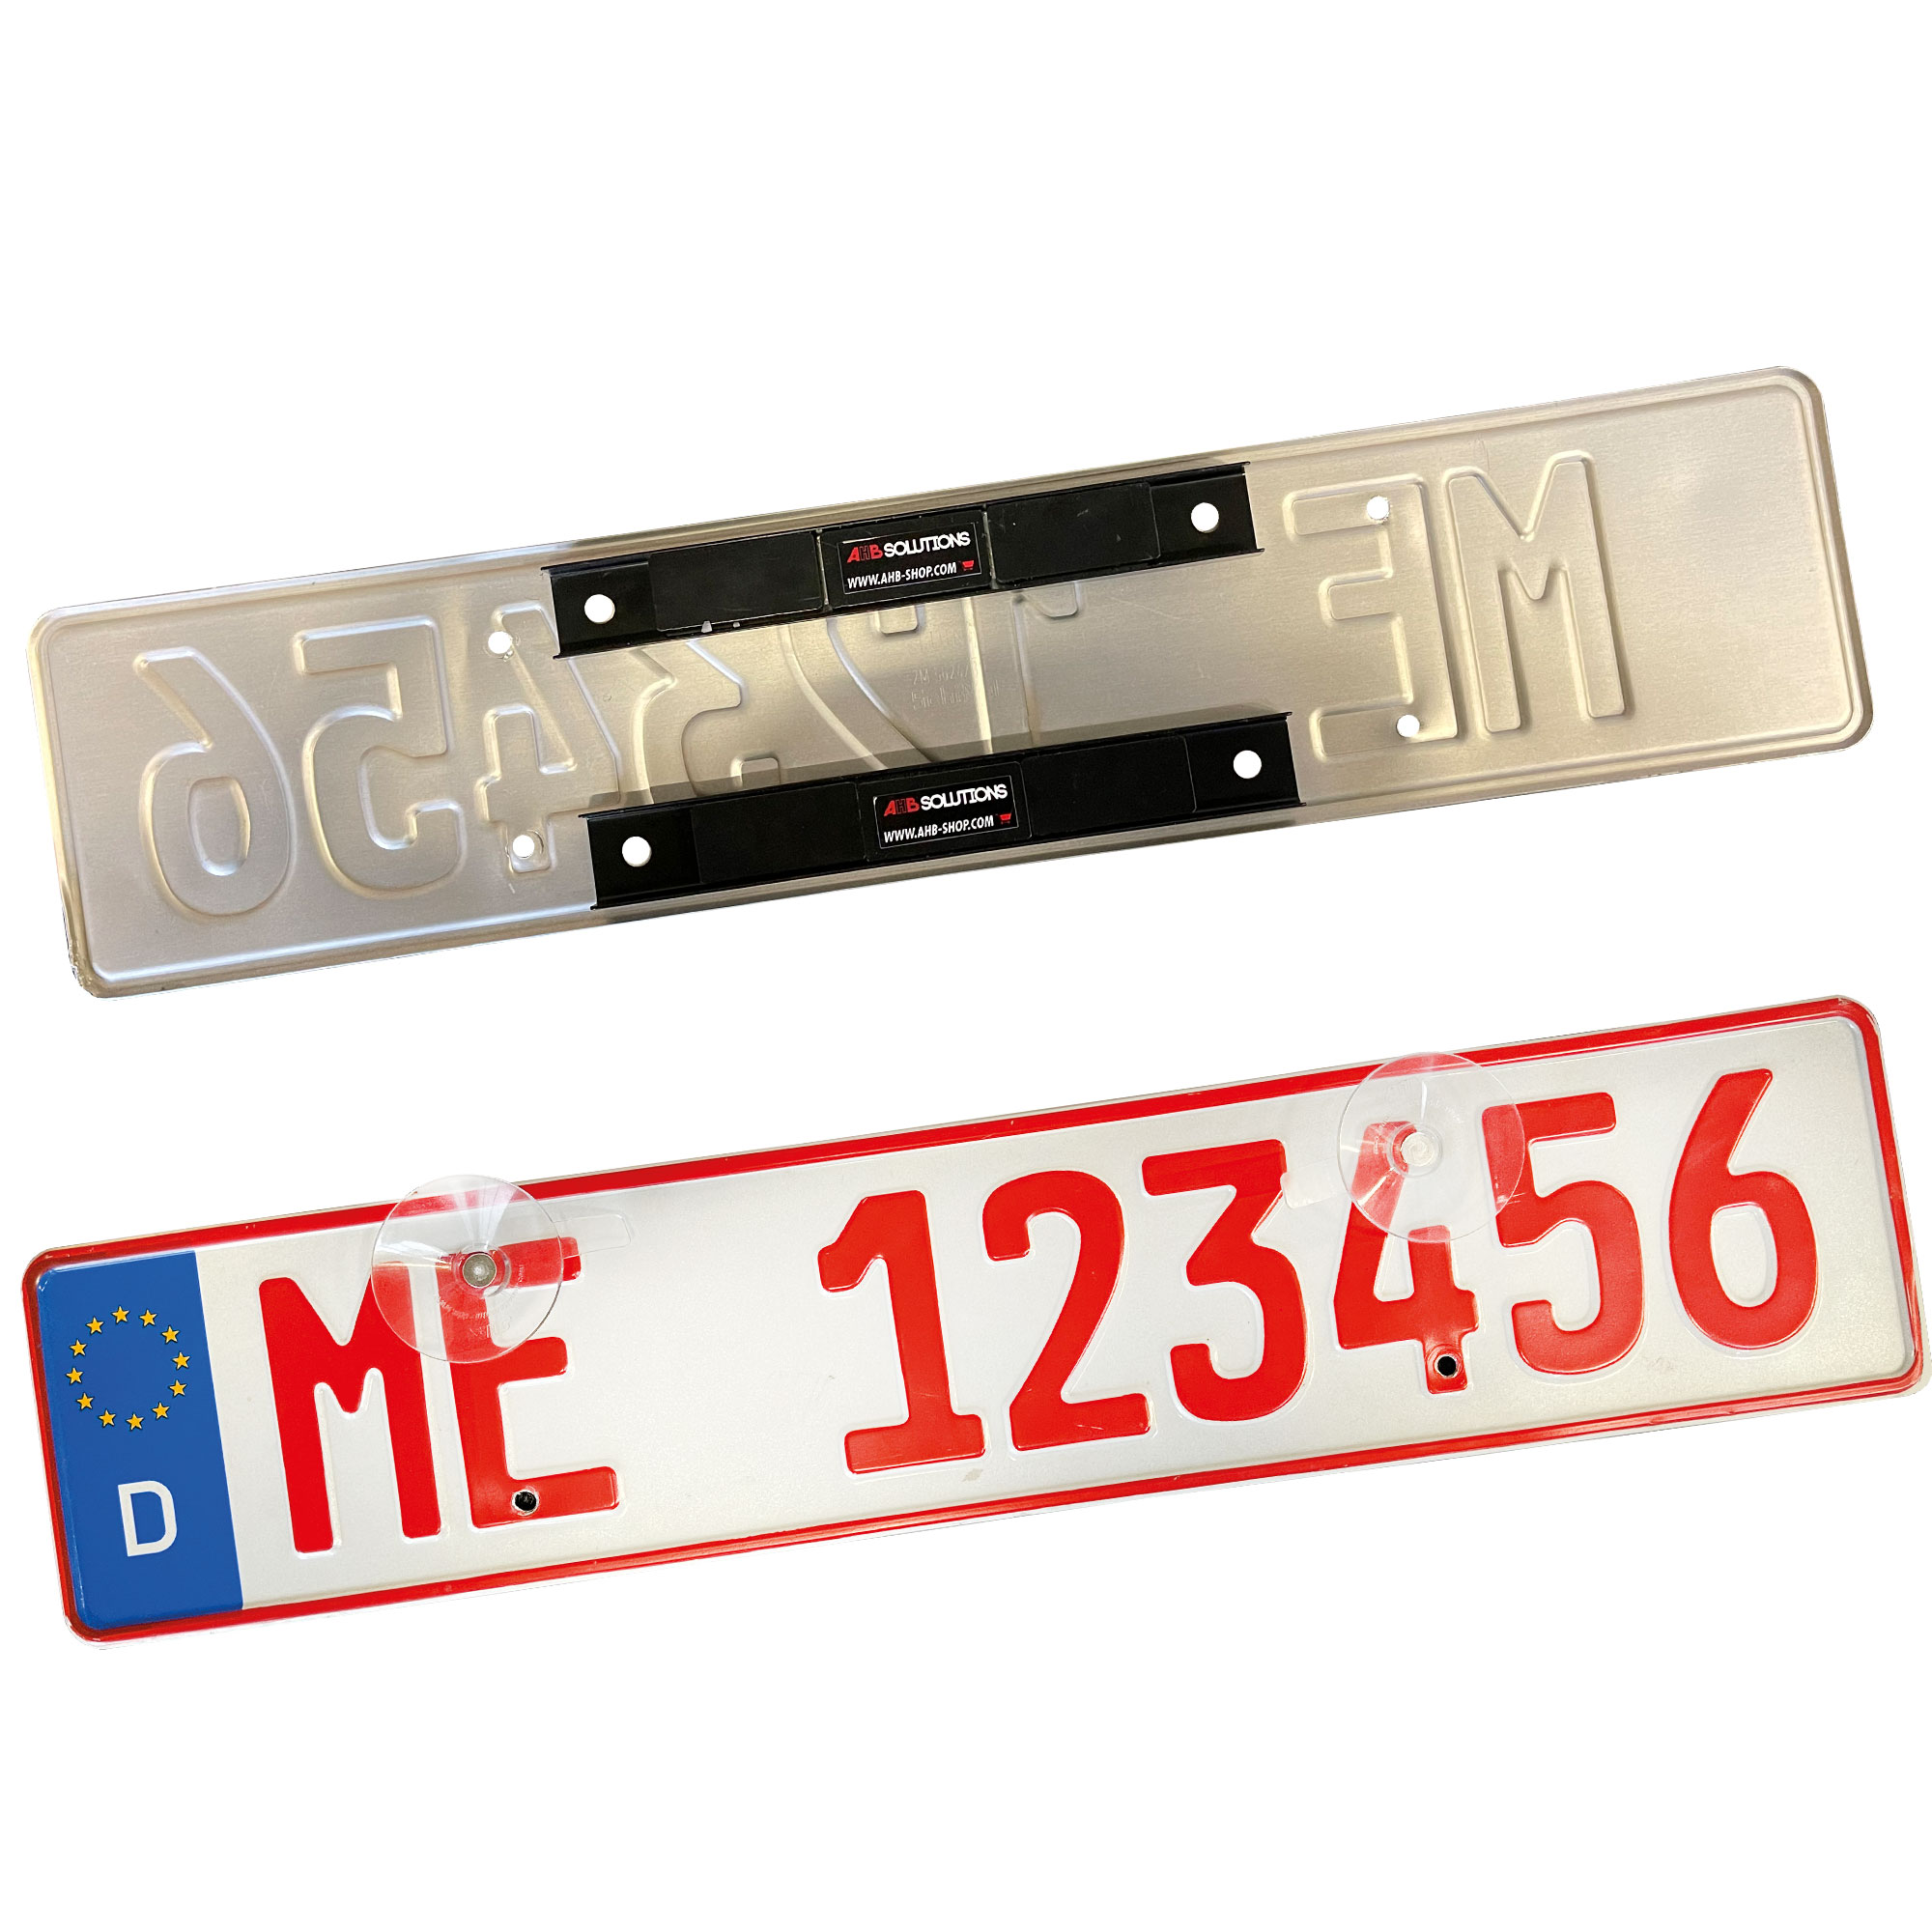 Magnet Set for Red License Plate